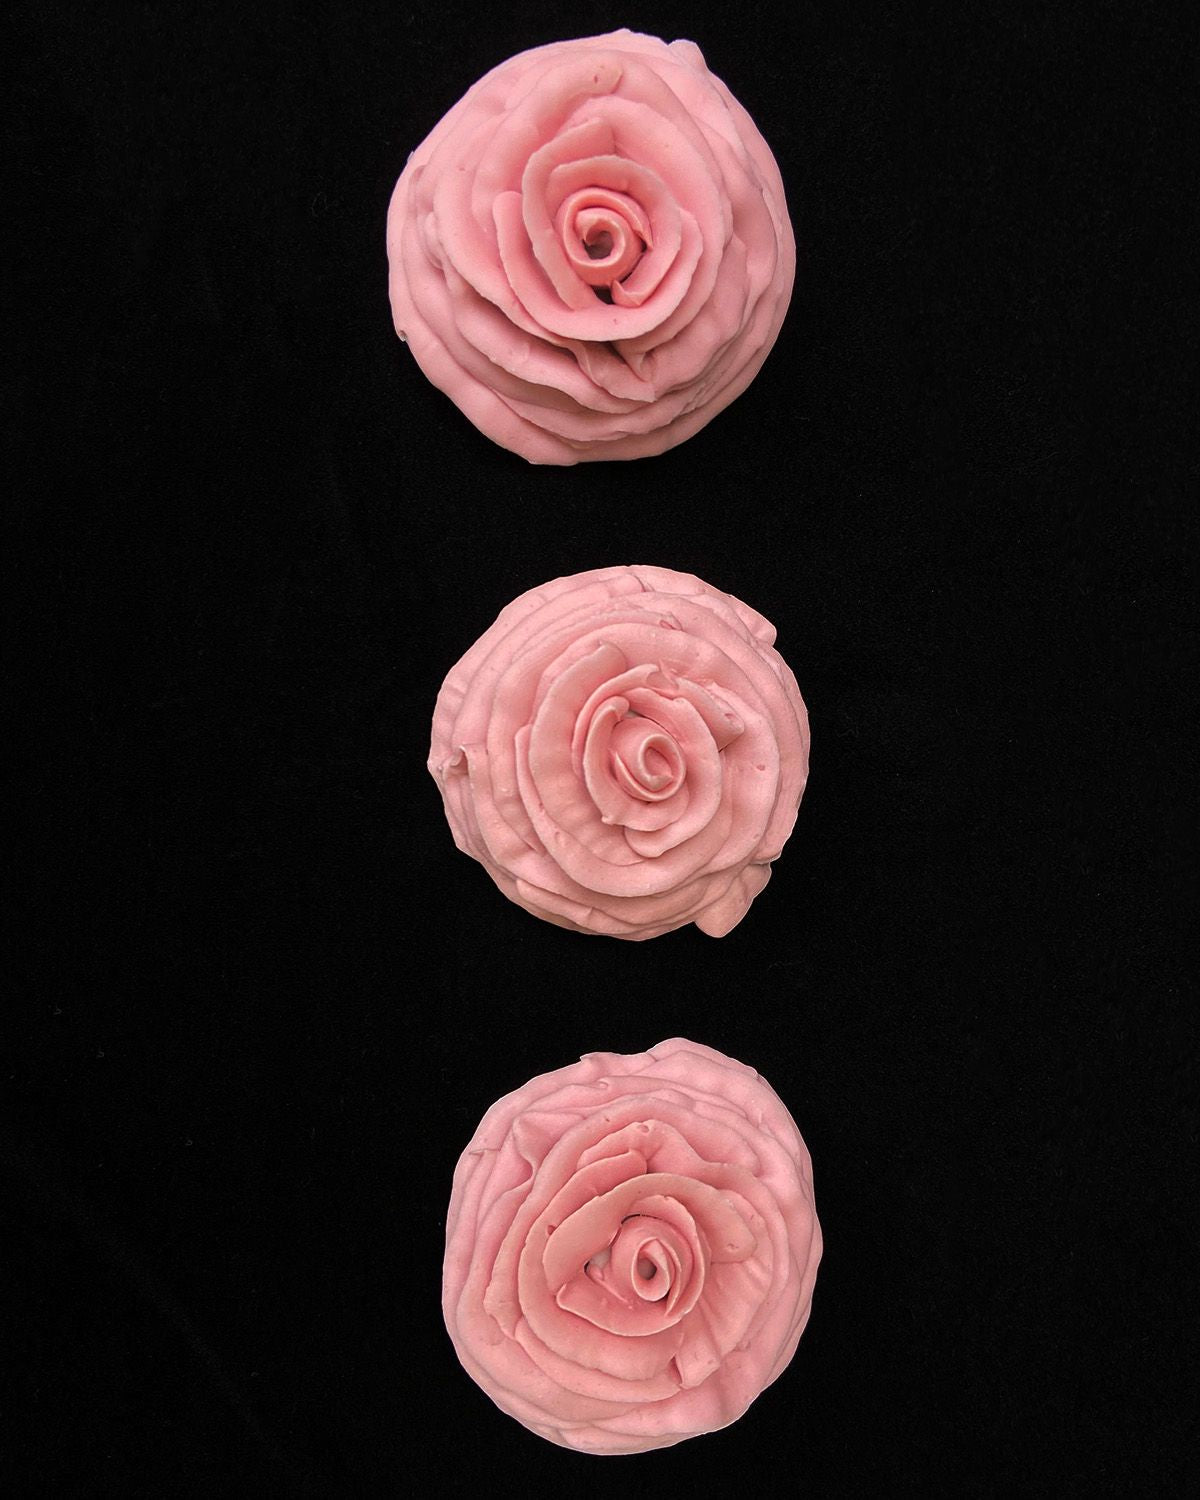 Robert Chamberlin, "Rose Magnets (3 Pack)"